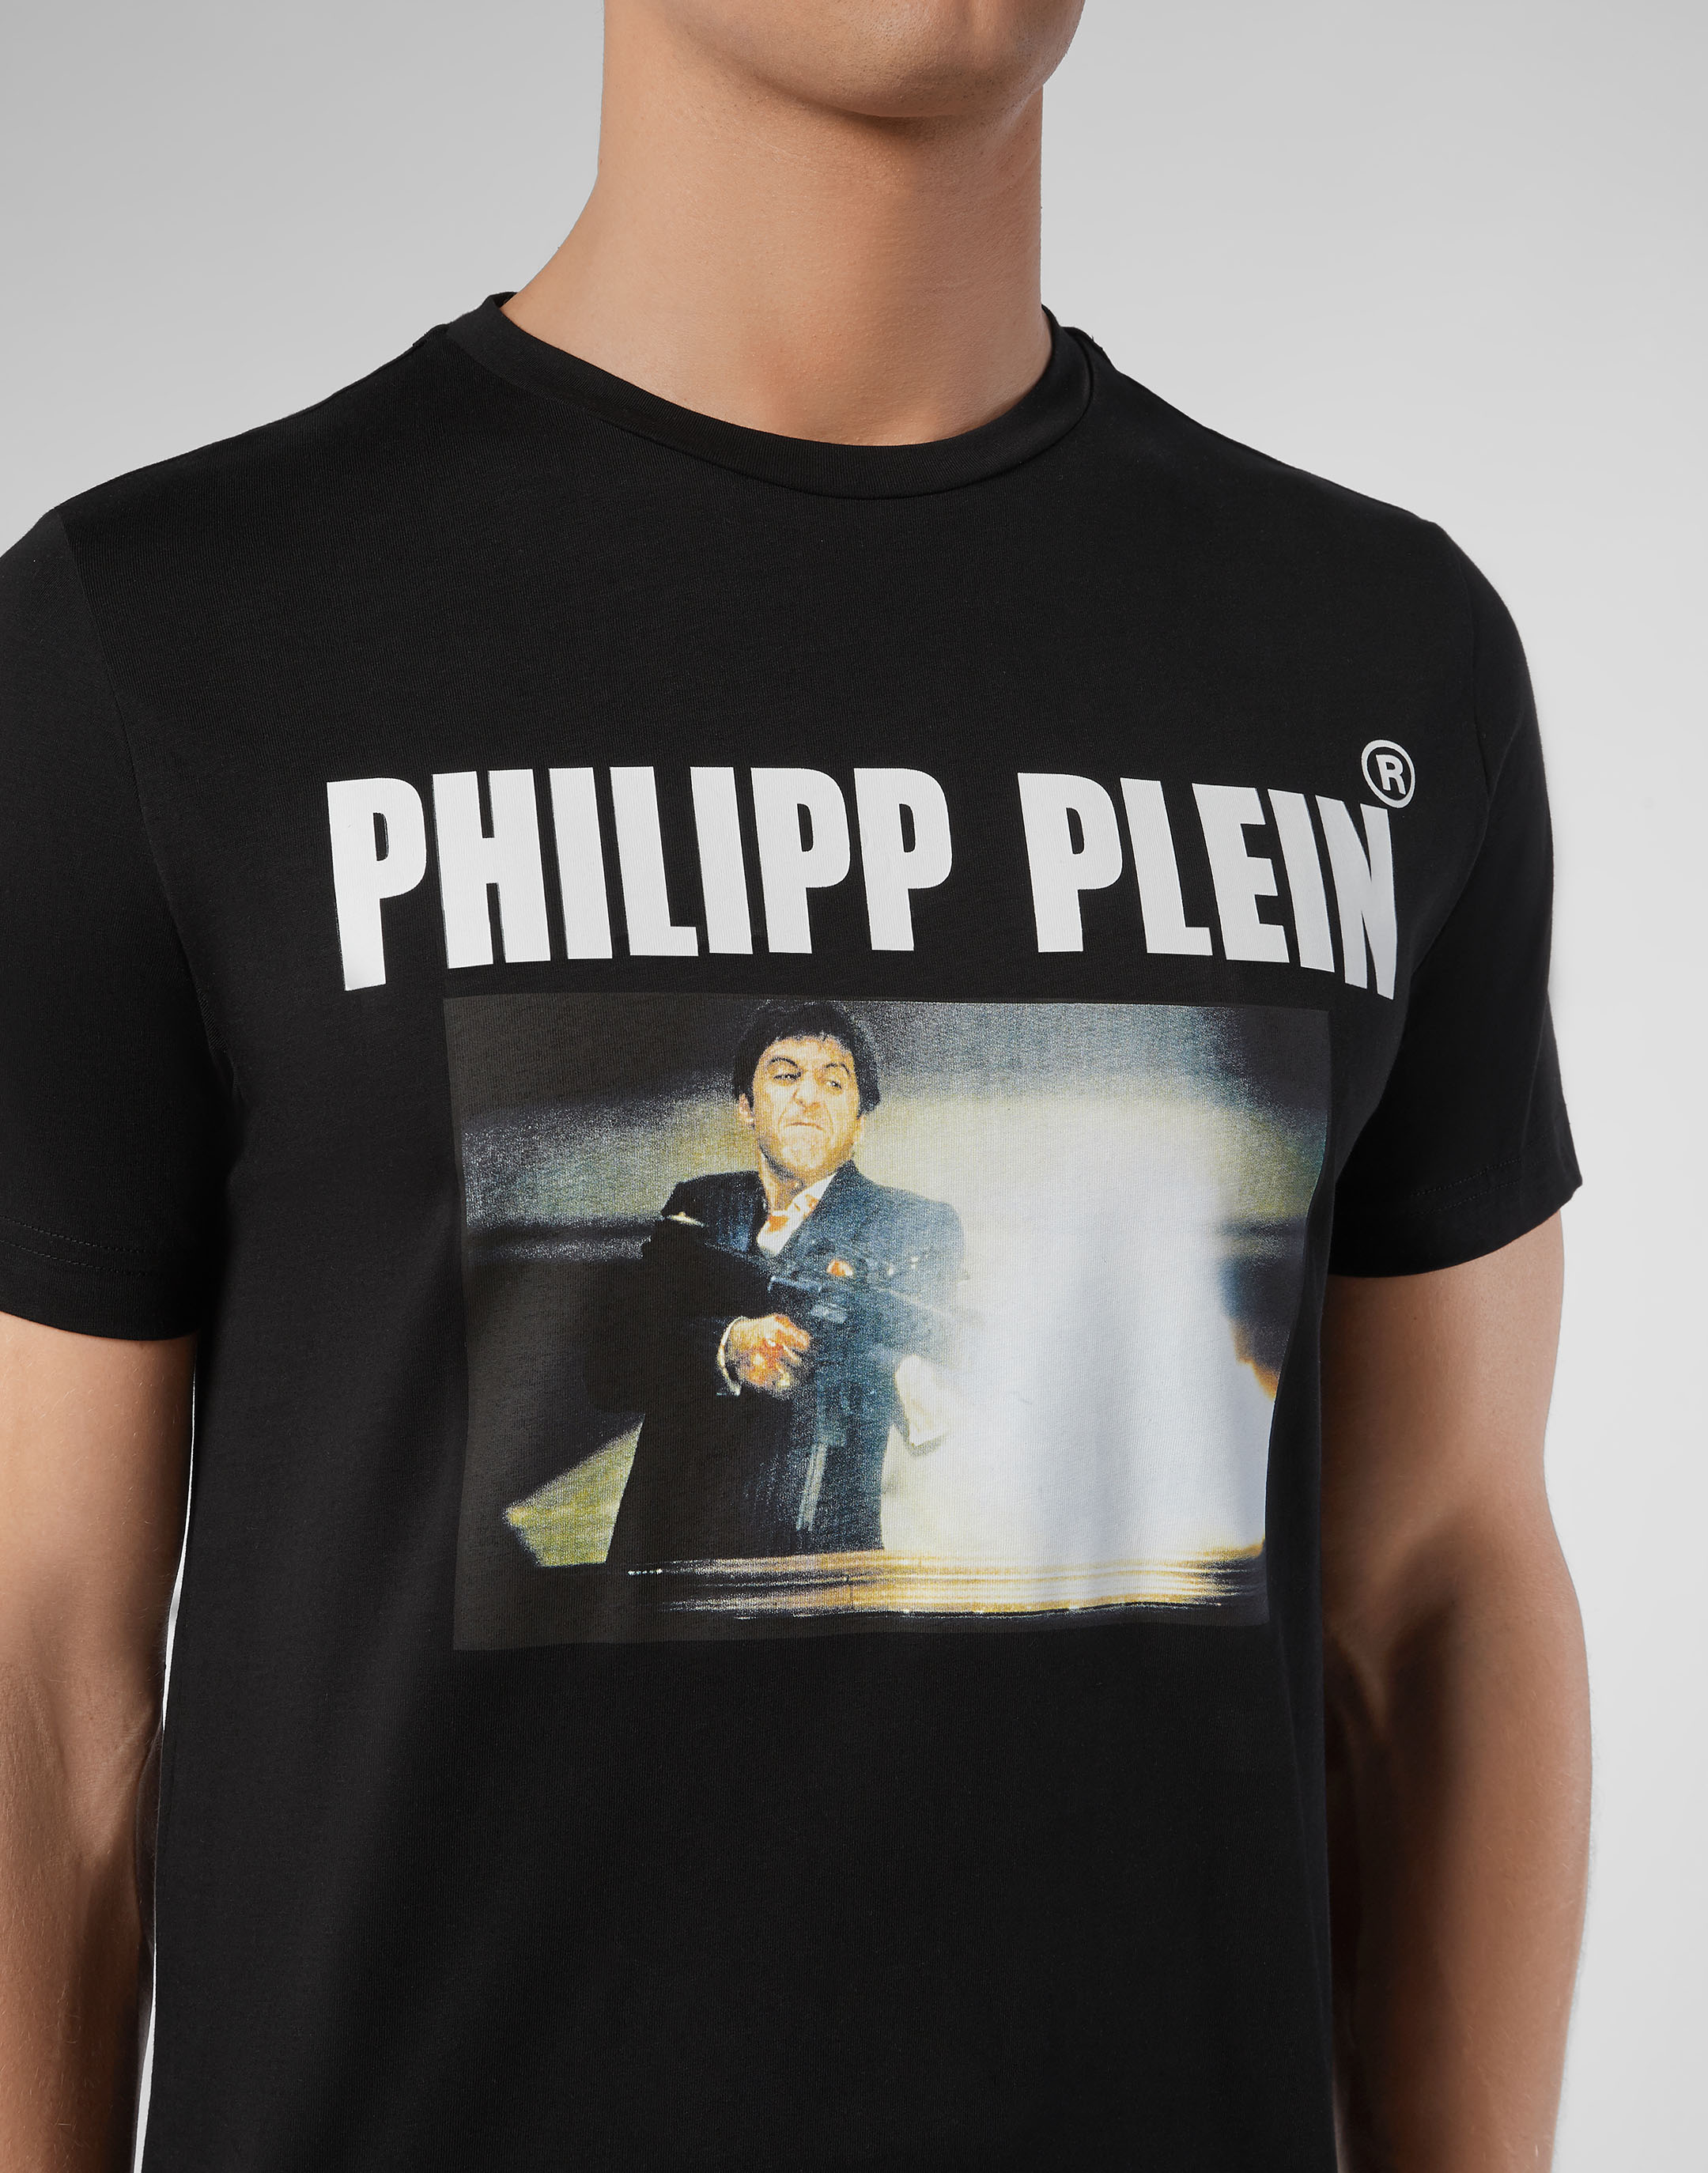 T-shirt Platinum Cut Round Neck Scarface | Philipp Plein Outlet